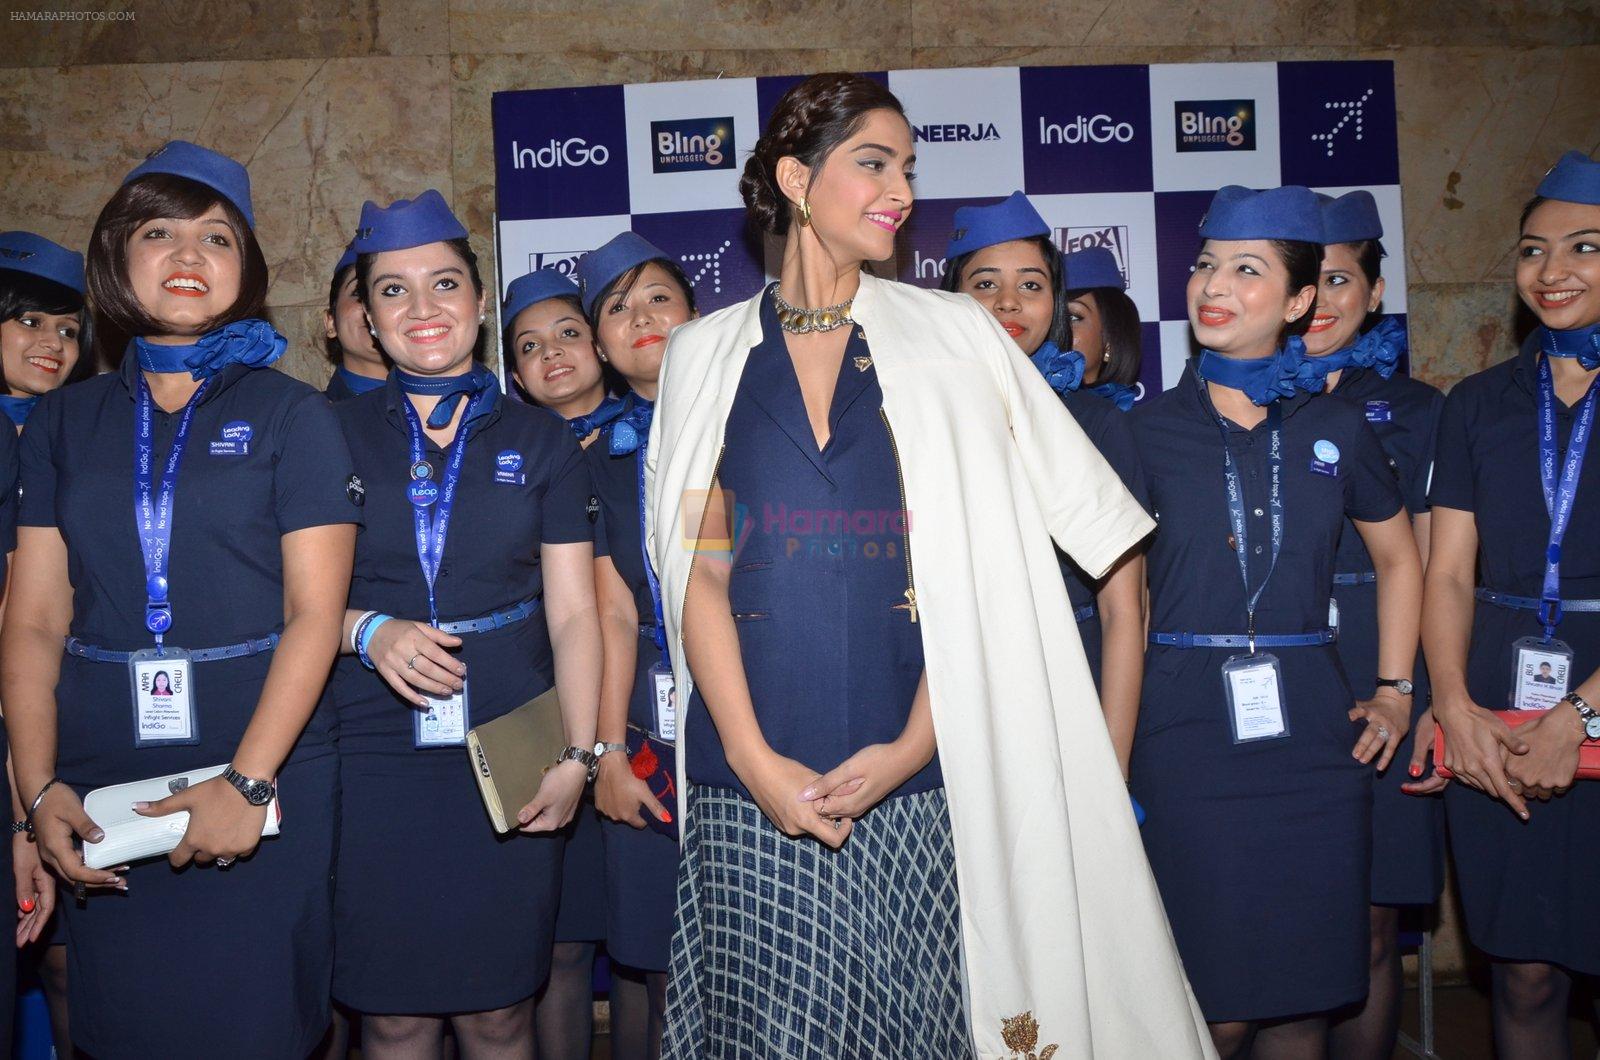 Sonam Kapoor at Neerja screening with air hostess of Indigo in Mumbai on 18th Feb 2016